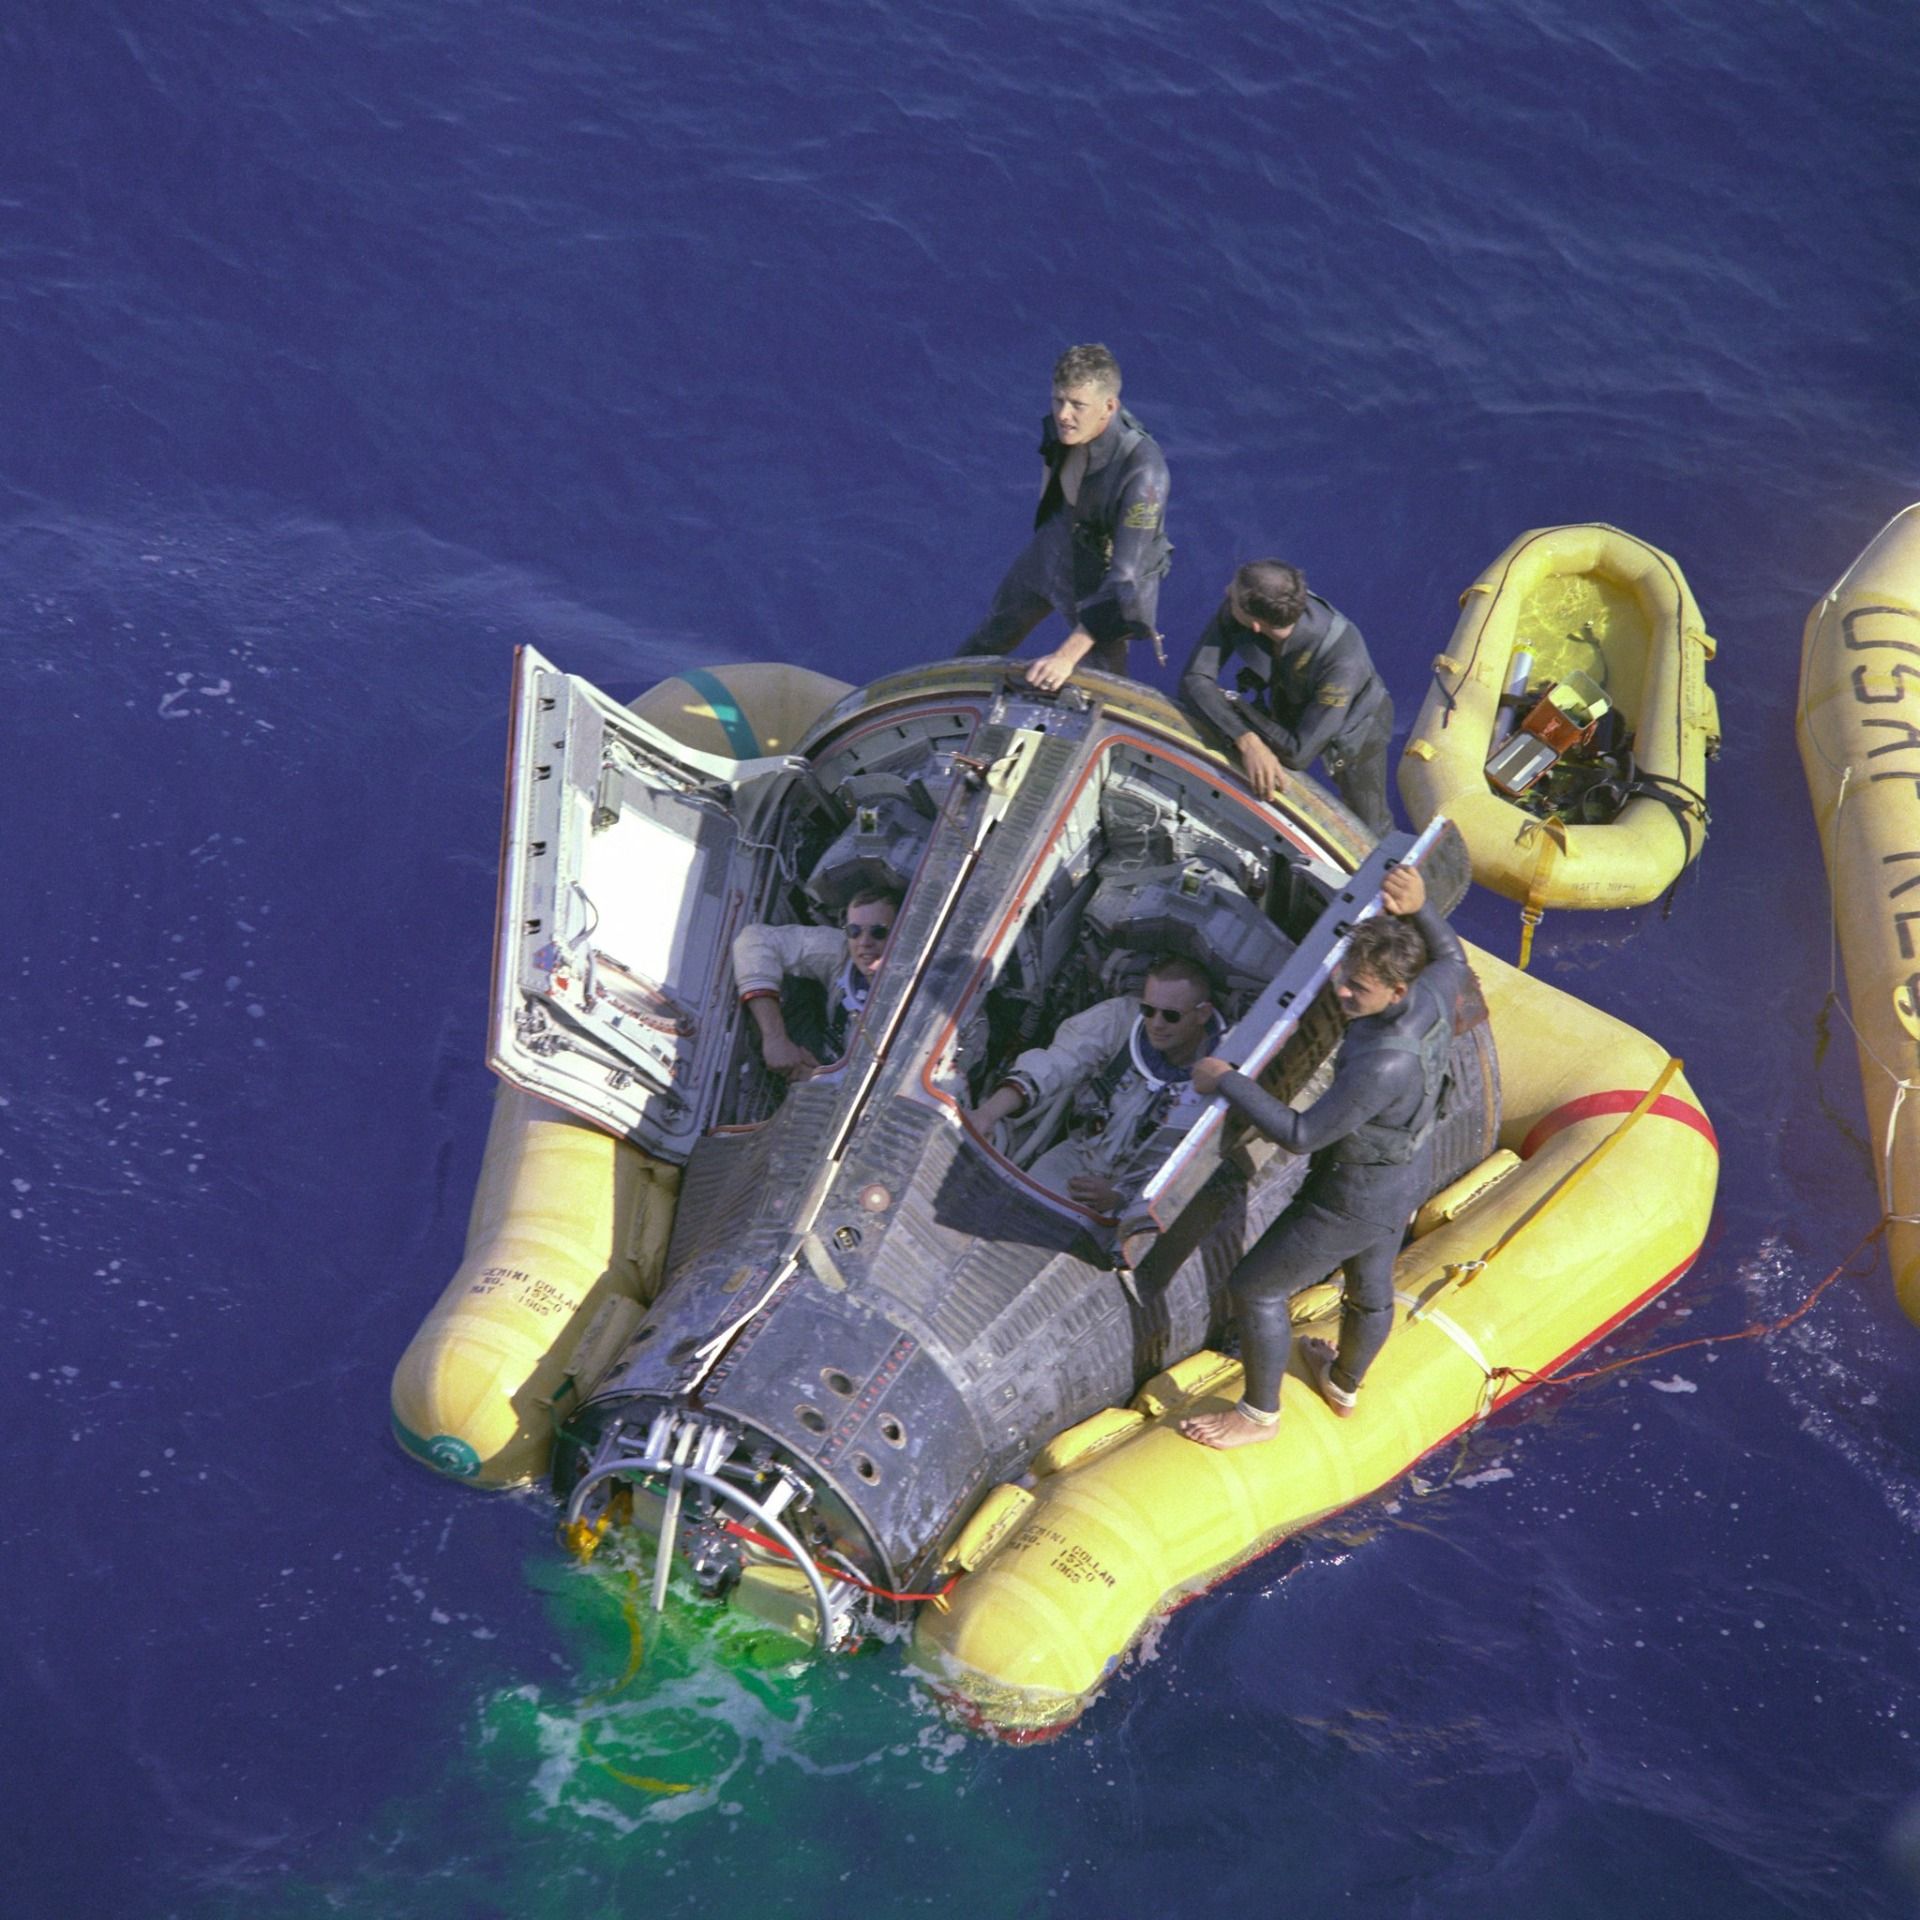 Astronauts and pararescuers in Gemini 8 capsule after splashdown